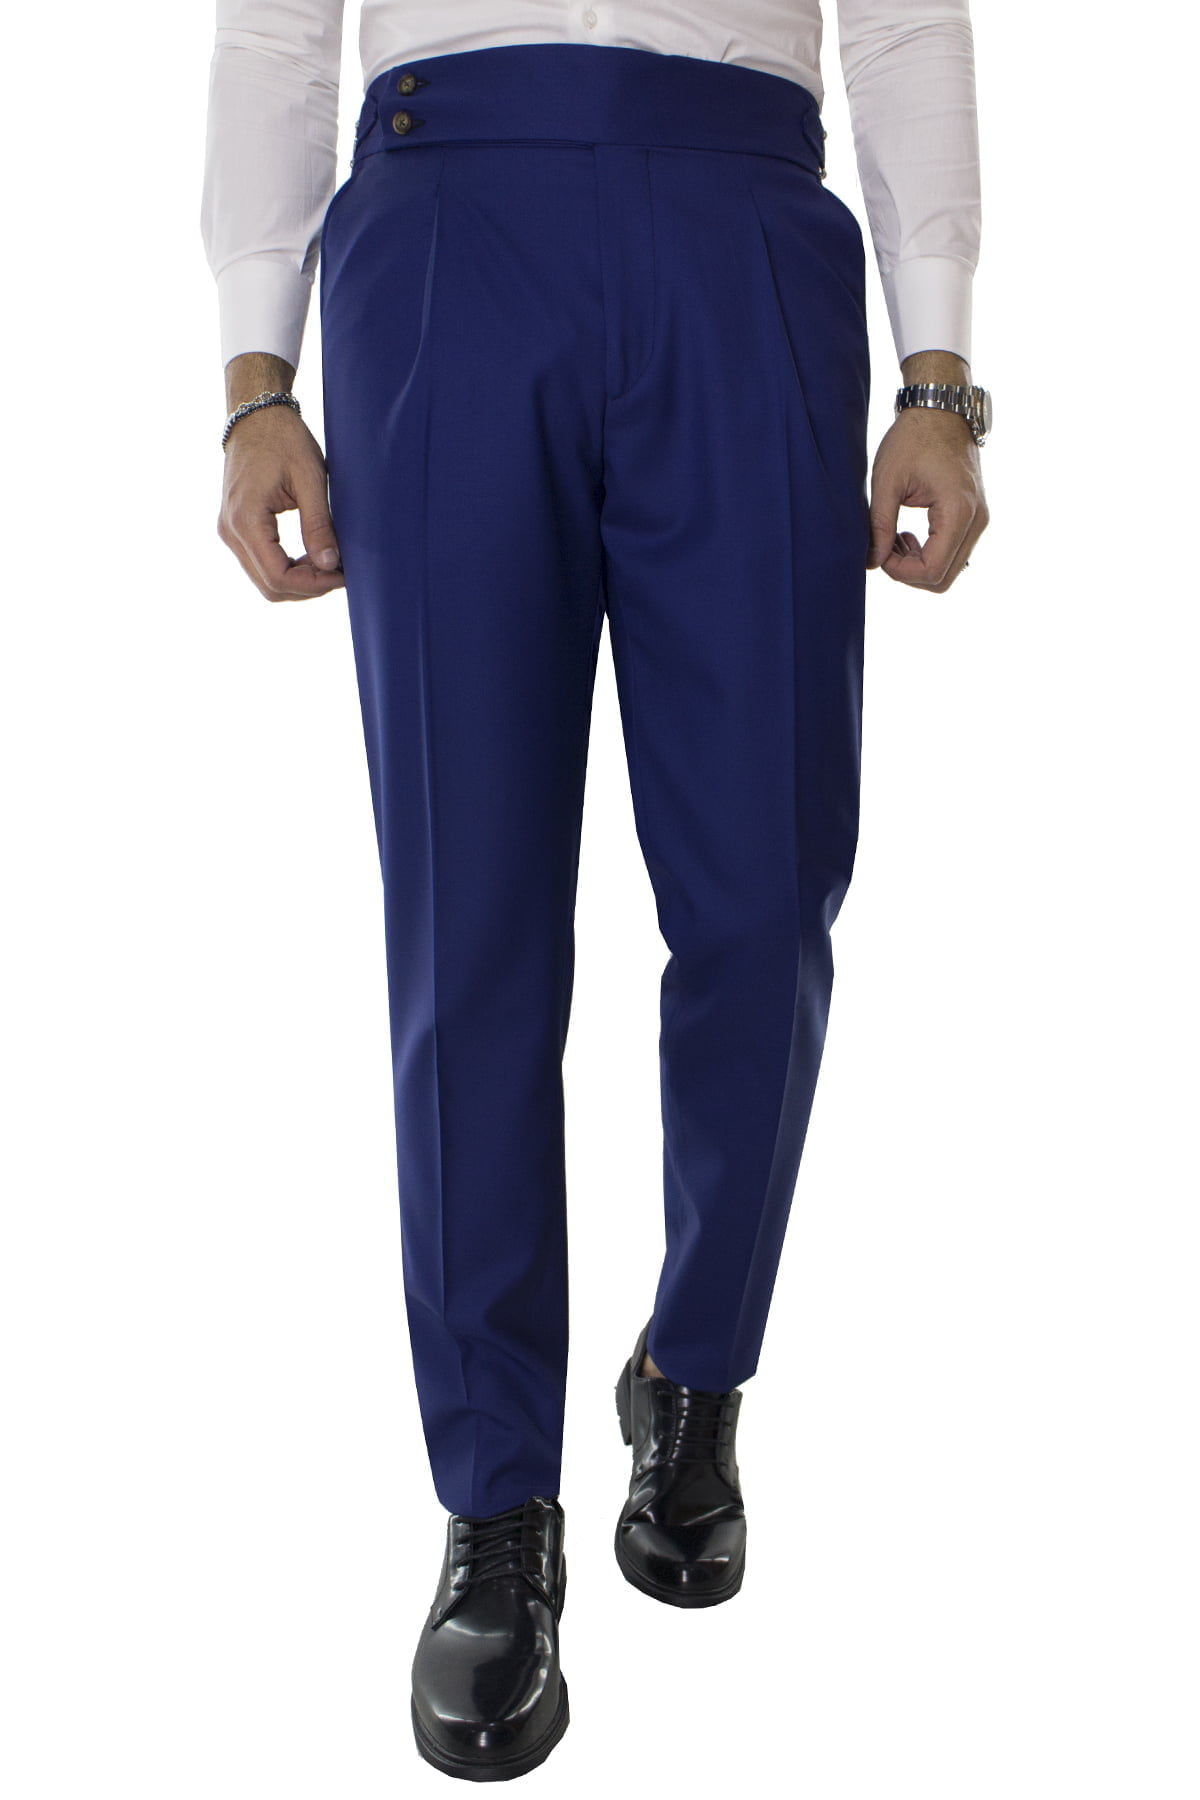 Pantalone uomo royal in fresco lana super140s vita alta con pinces e fibbie laterali Holland & Sherry